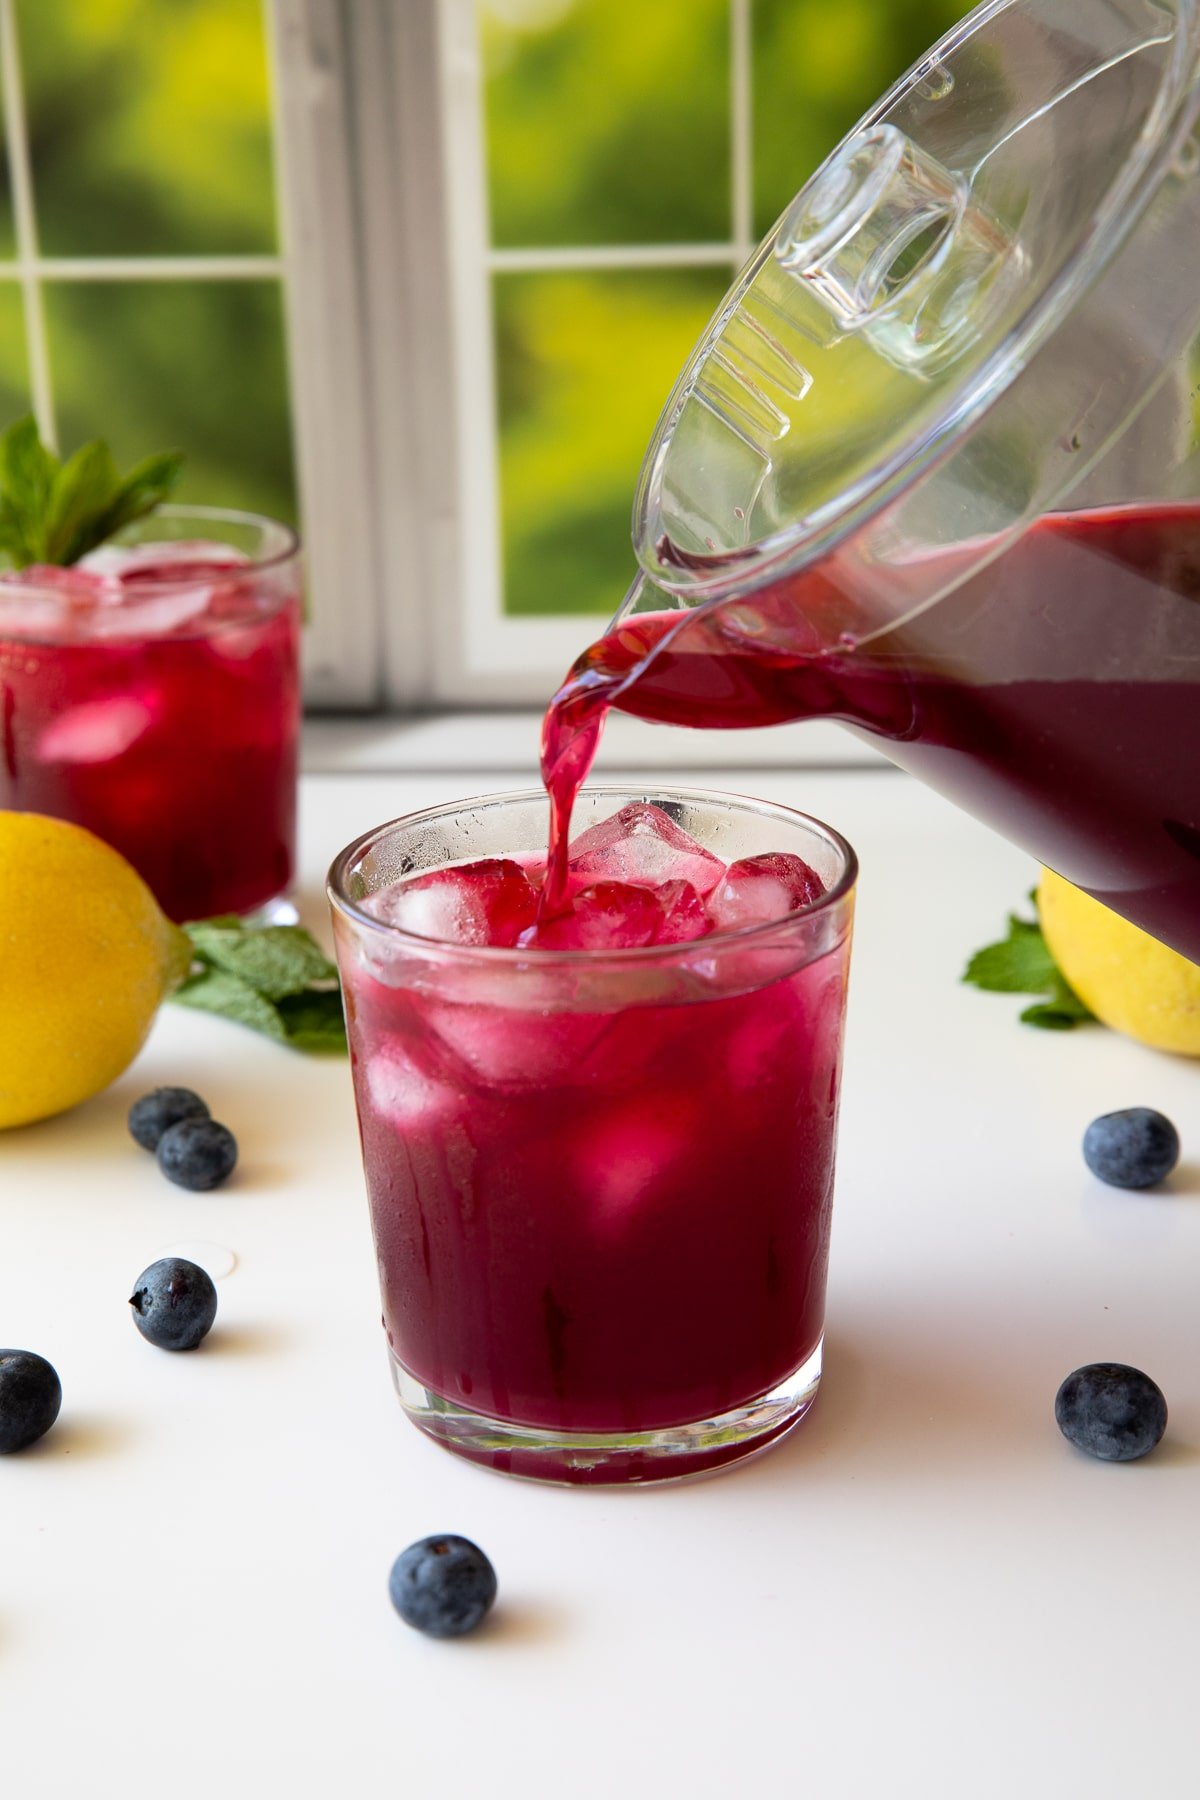 pouring blueberry lemonade into a glass.